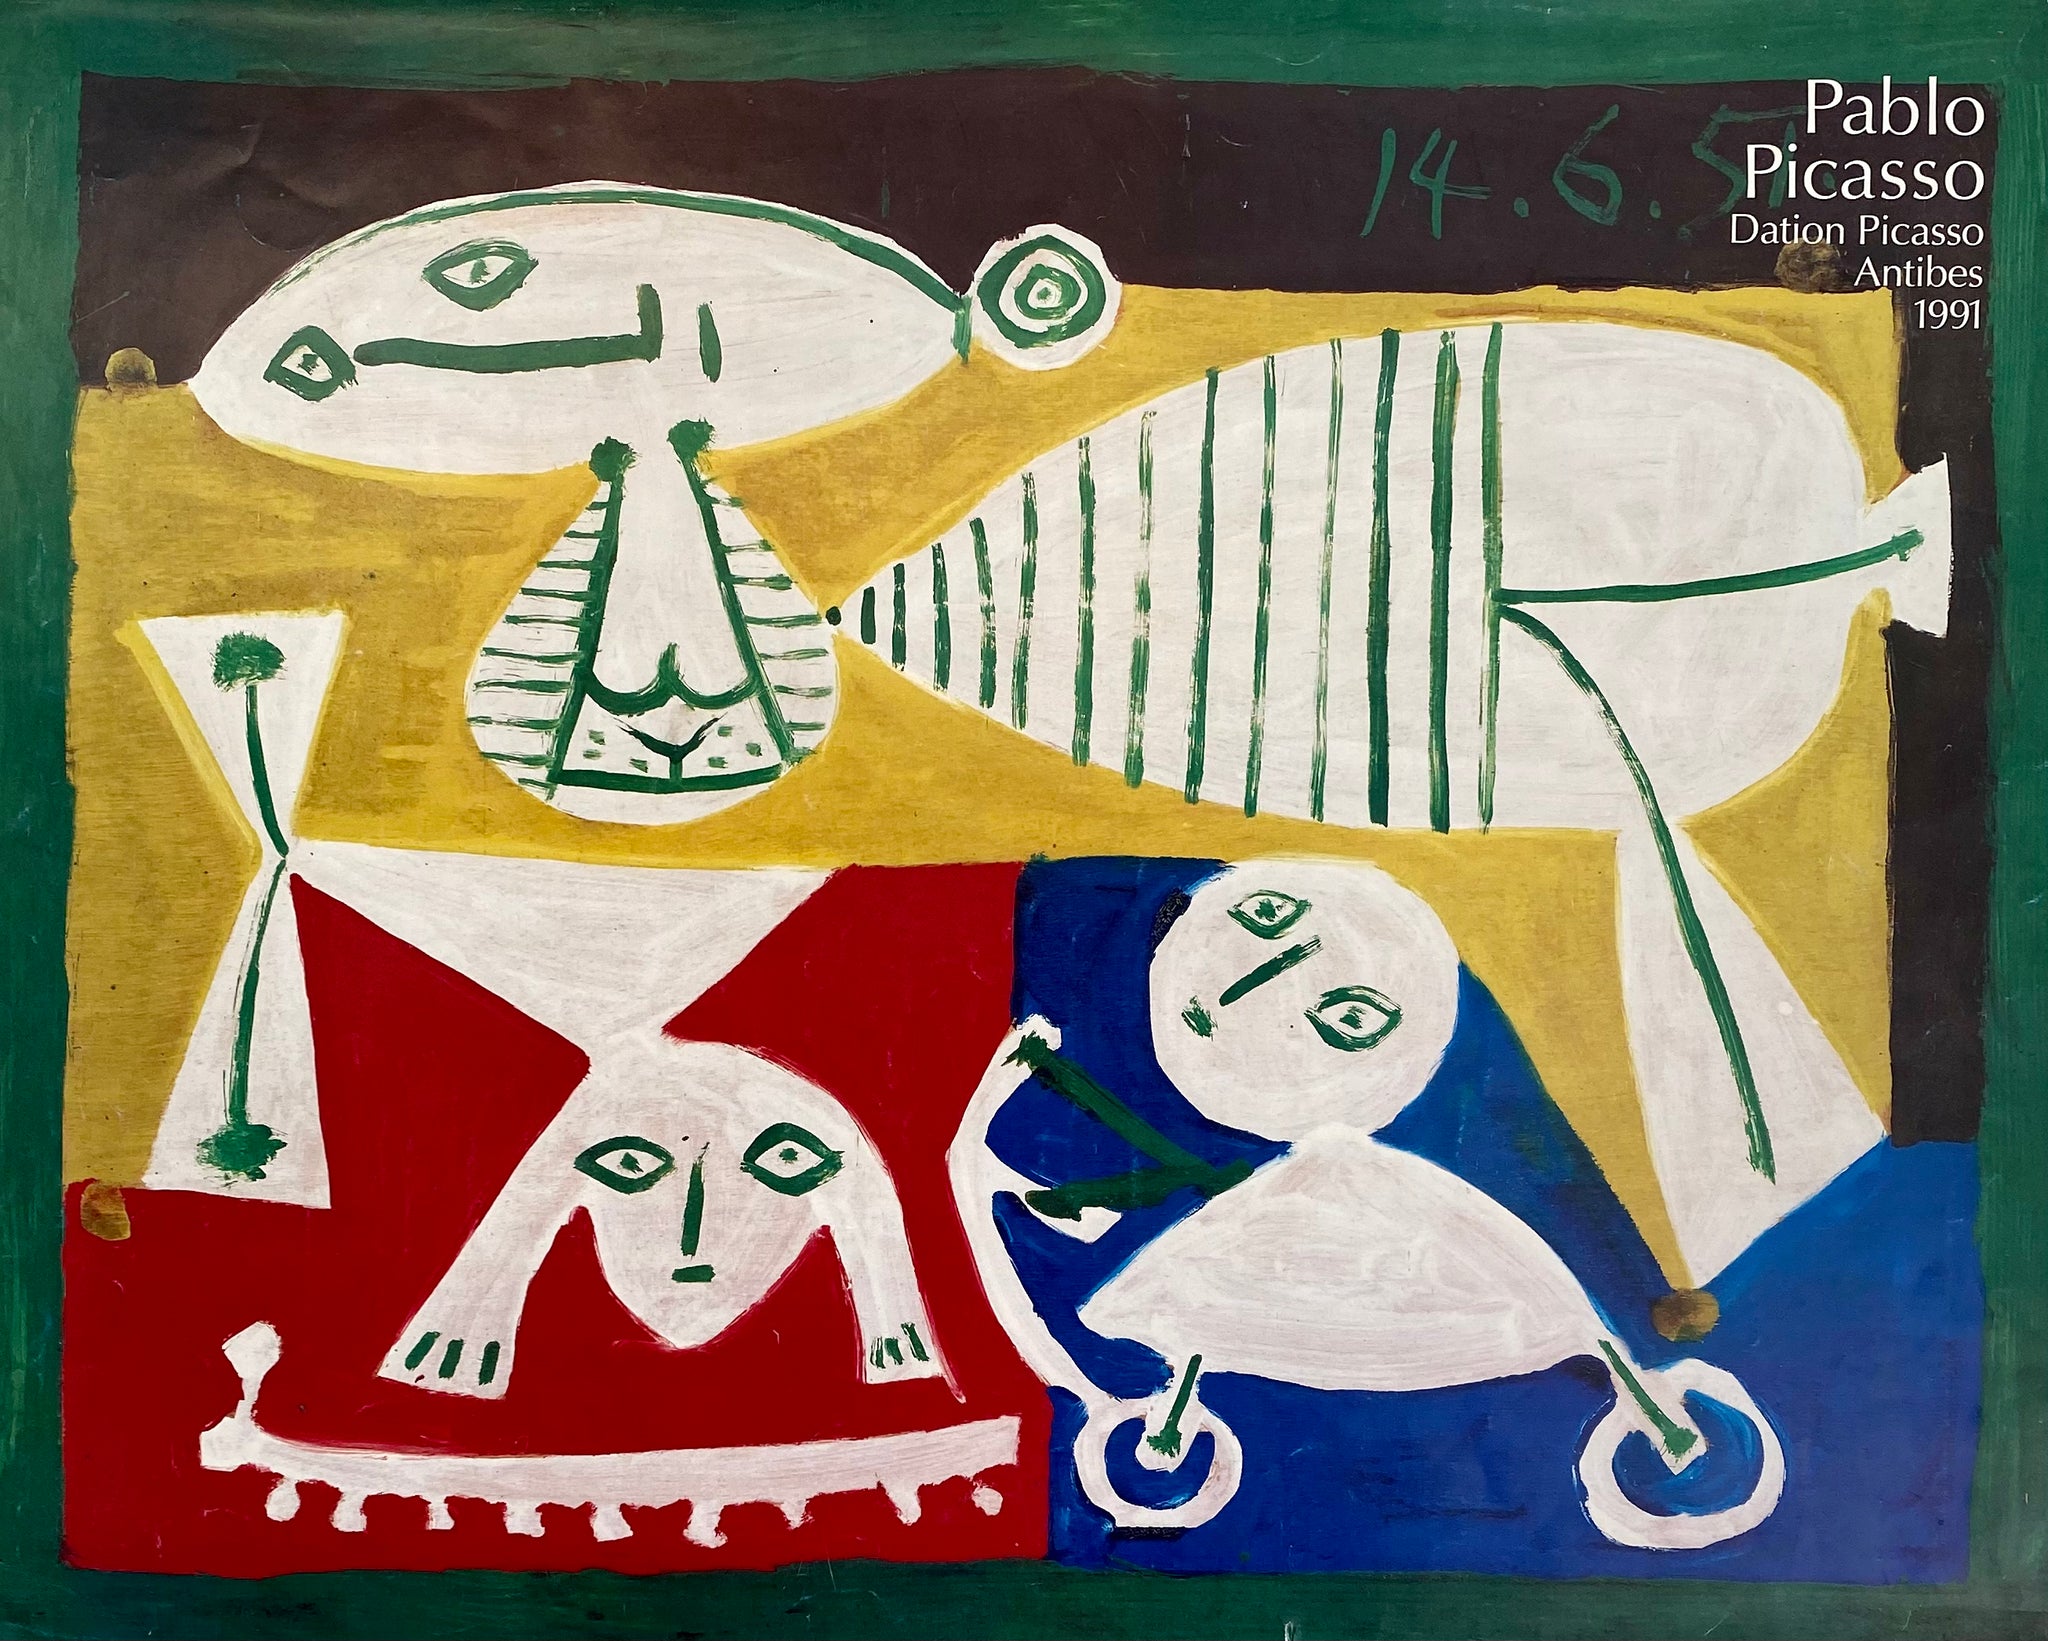 Affiche dation Picasso Antibes Par Pablo Picasso, 1991